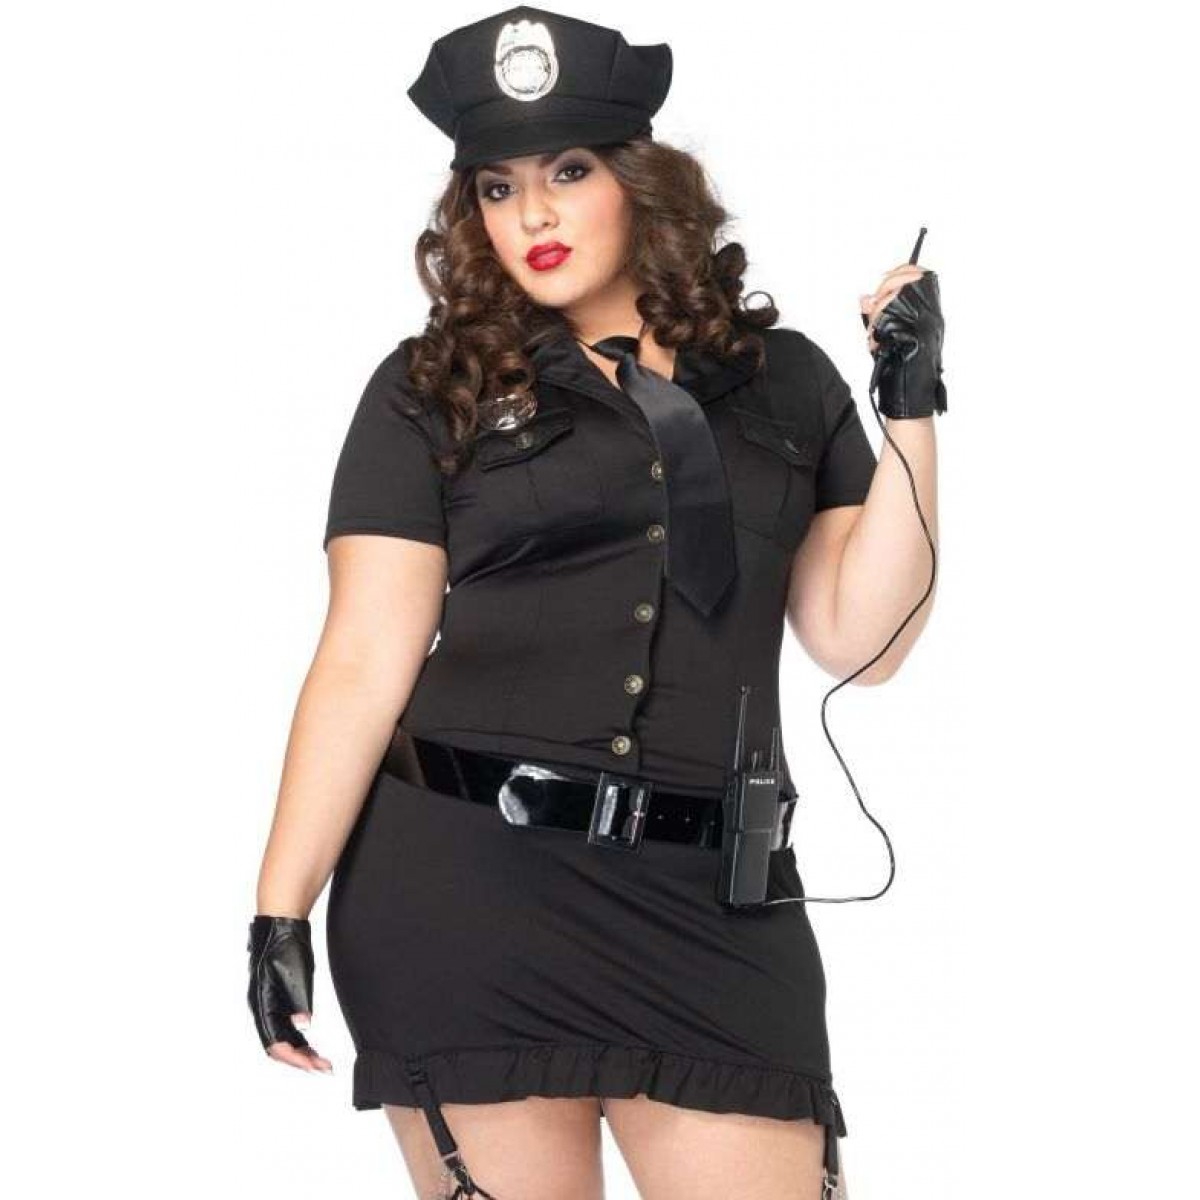 Dirty Cop Adult Womens Costume | Halloween Costume